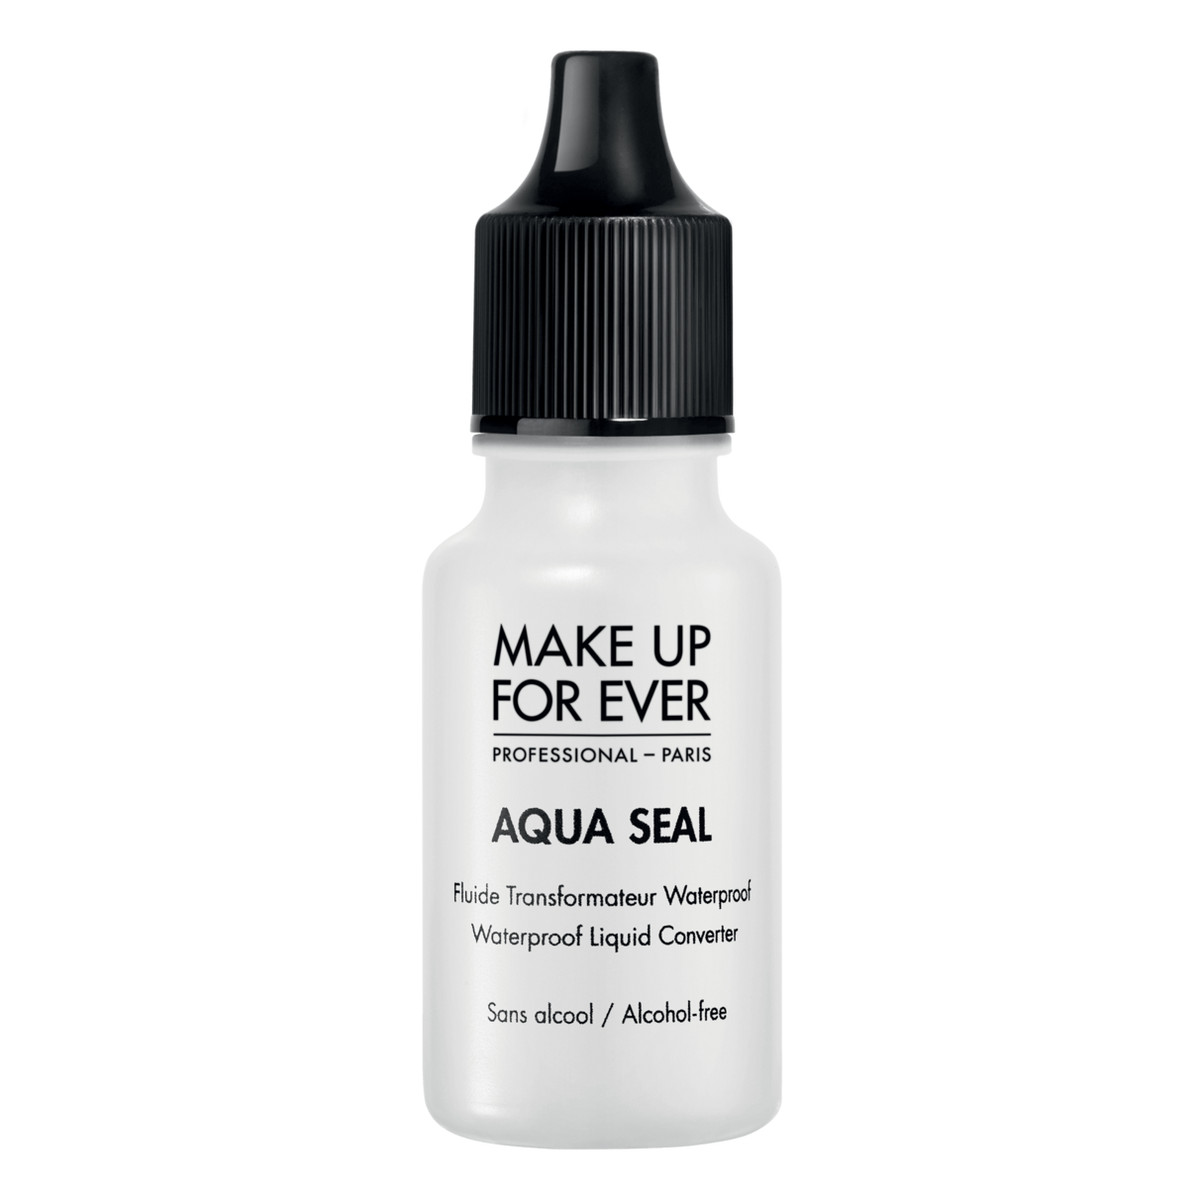 Make Up For Ever |  Aqua Seal - waterproof liquid converter